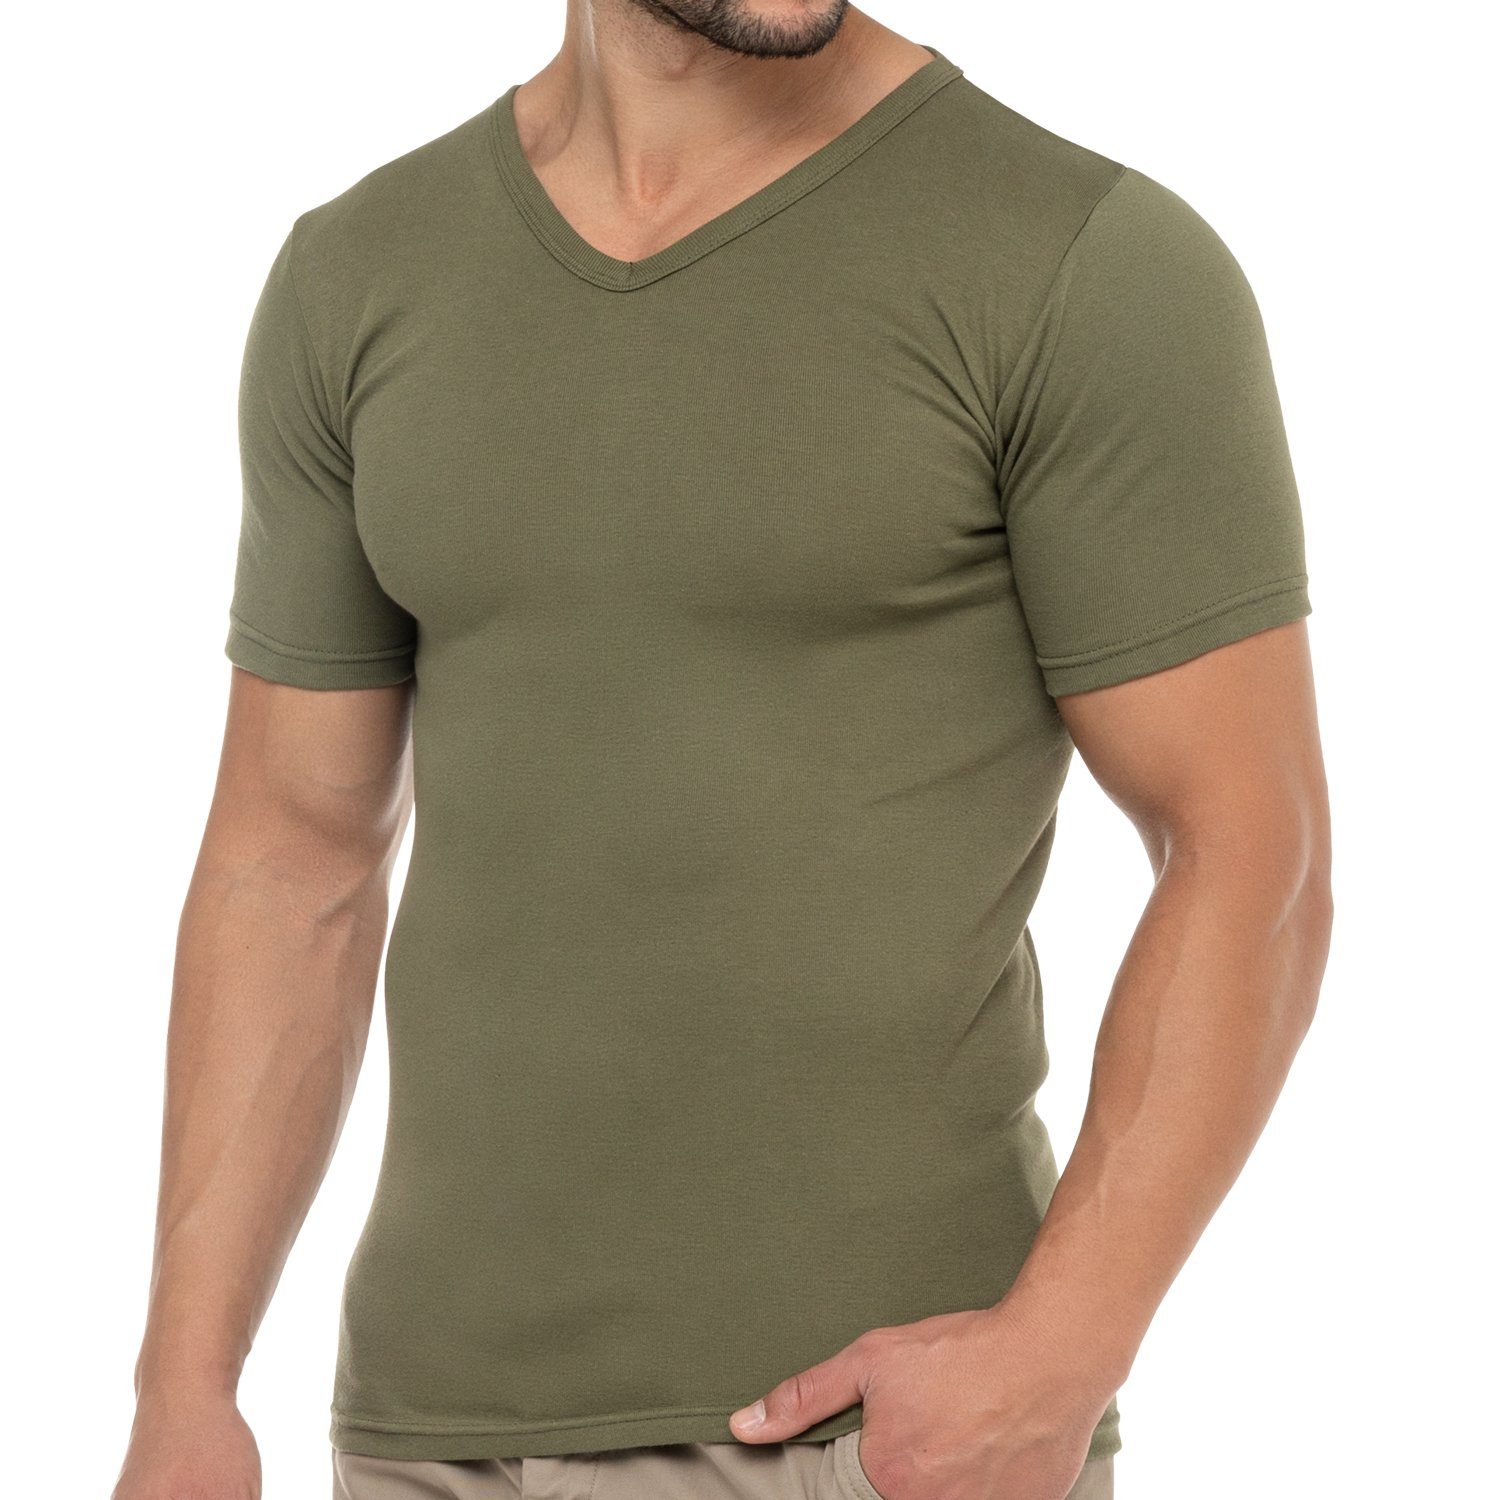 celodoro Kurzarmshirt Herren Business T-Shirt V-Neck Feinripp Baumwolle (1er/3er) 1 x Olive | T-Shirts